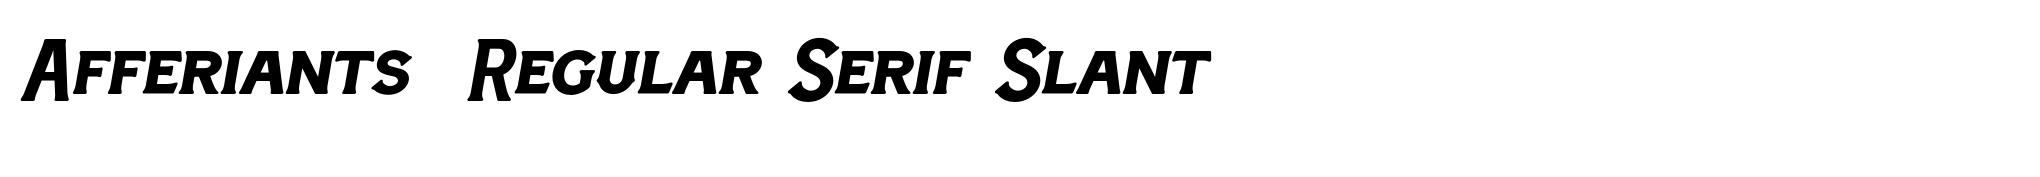 Afferiants  Regular Serif Slant image